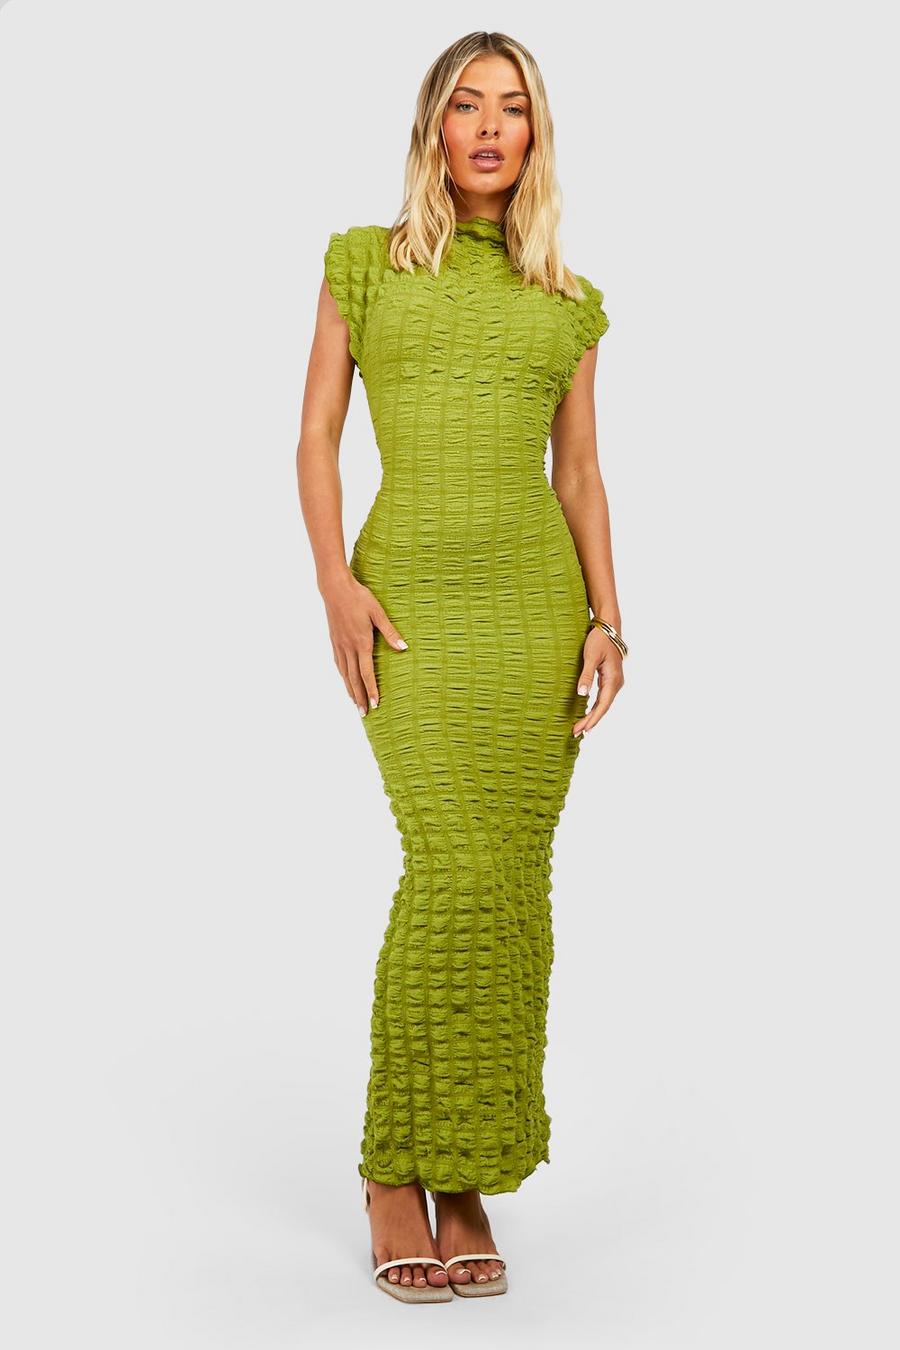 Olive green Bubble Textured Sleeveless Midaxi Dress